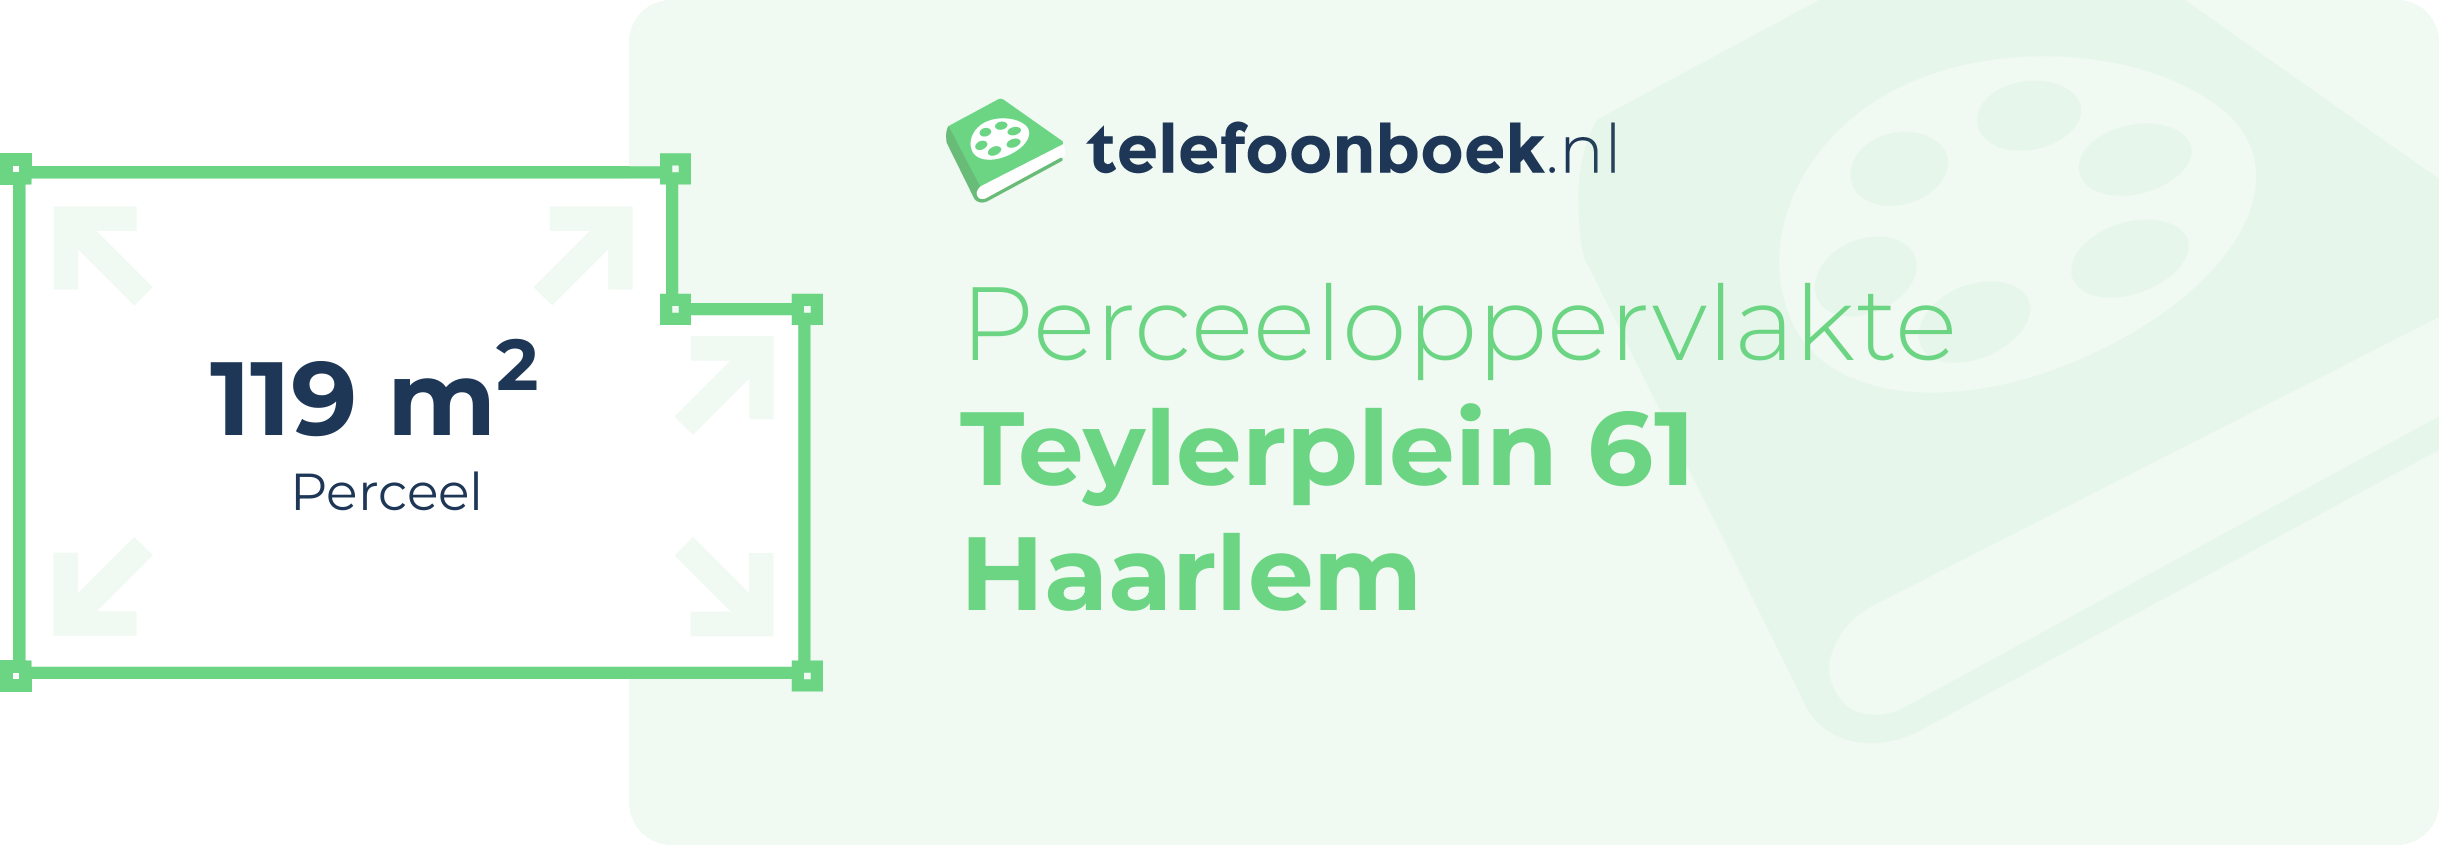 Perceeloppervlakte Teylerplein 61 Haarlem